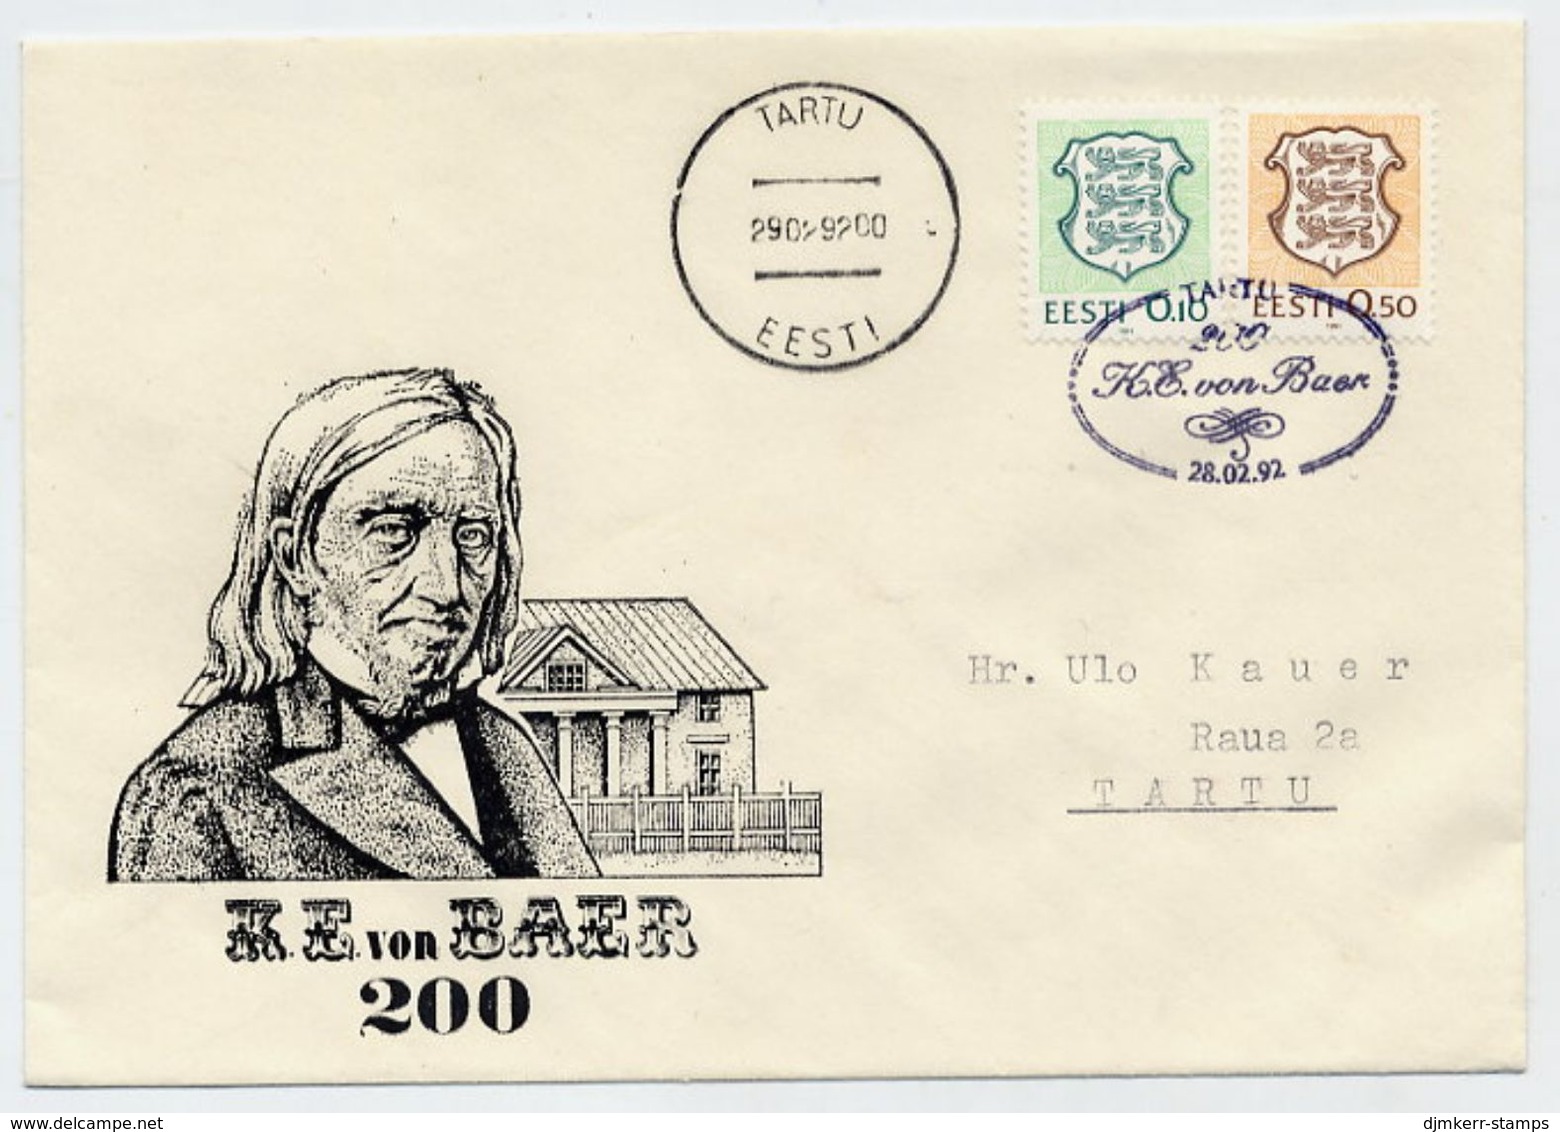 ESTONIA 1992 Commemorative Cover And Postmark Bicentenary Of Von Baer. - Estonia